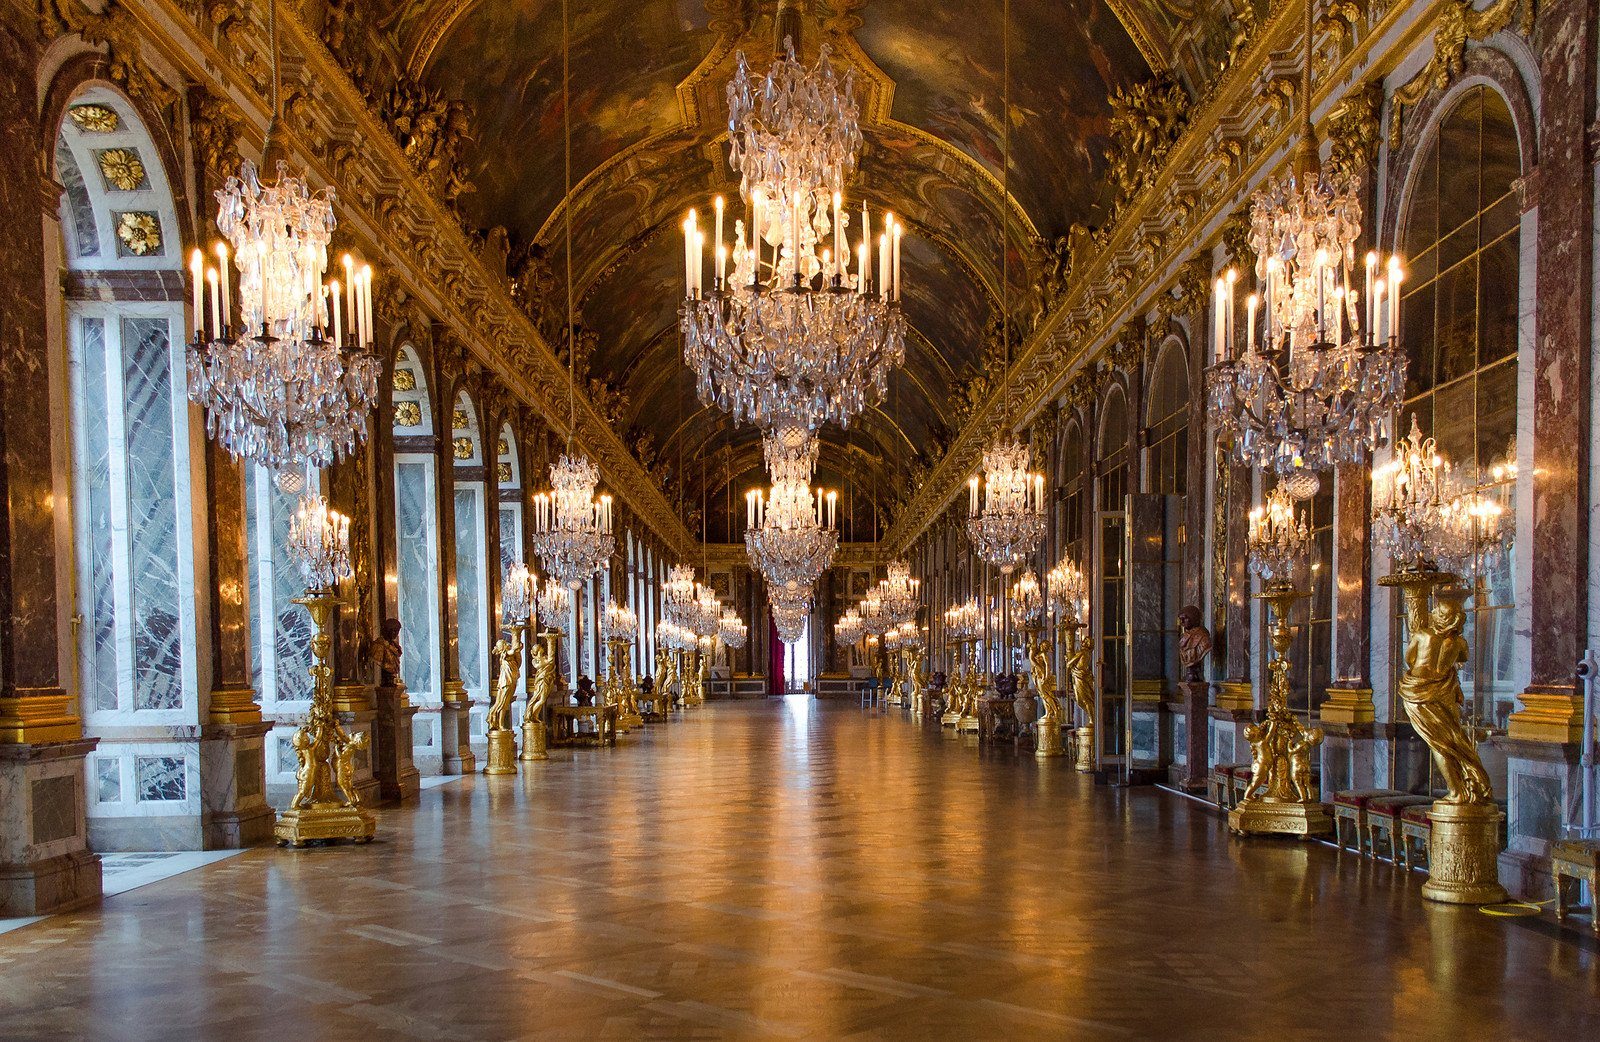 Галереи версаля. Версальский дворец внутри. Версальский дворец внутри зеркальная галерея. Версальский дворец зал войны.